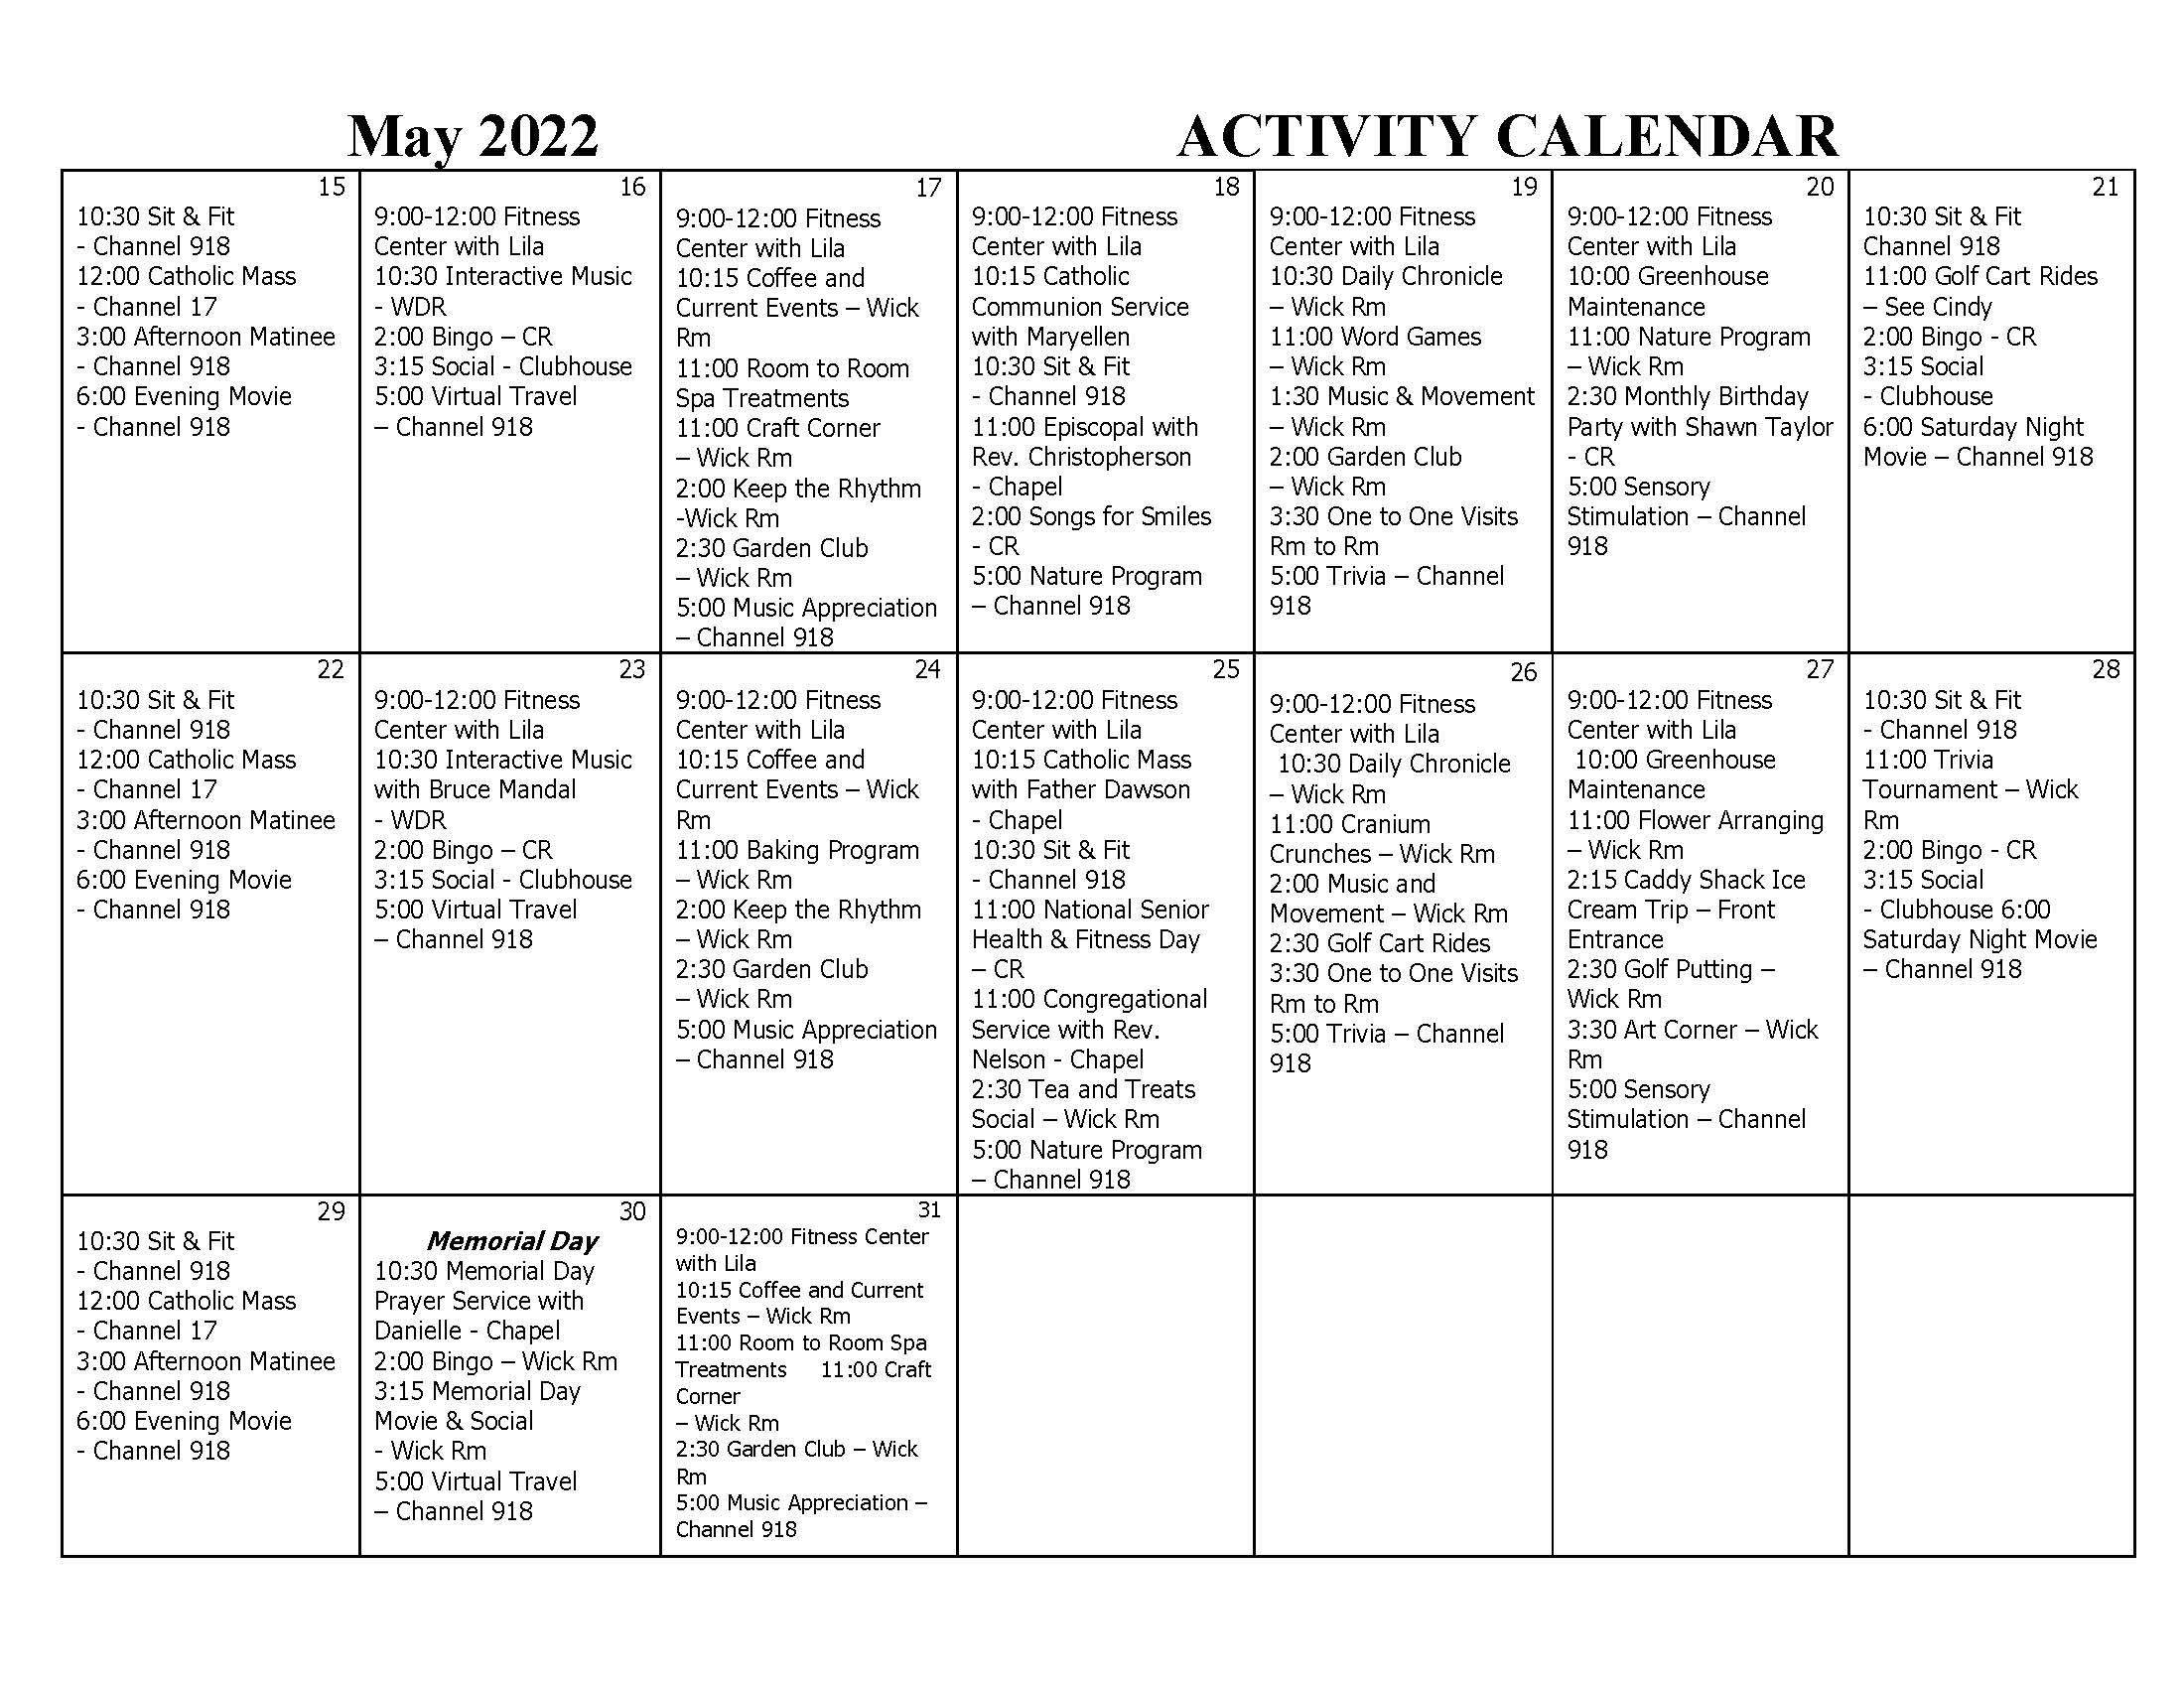 May 2022 Activity Calendar_Page_2